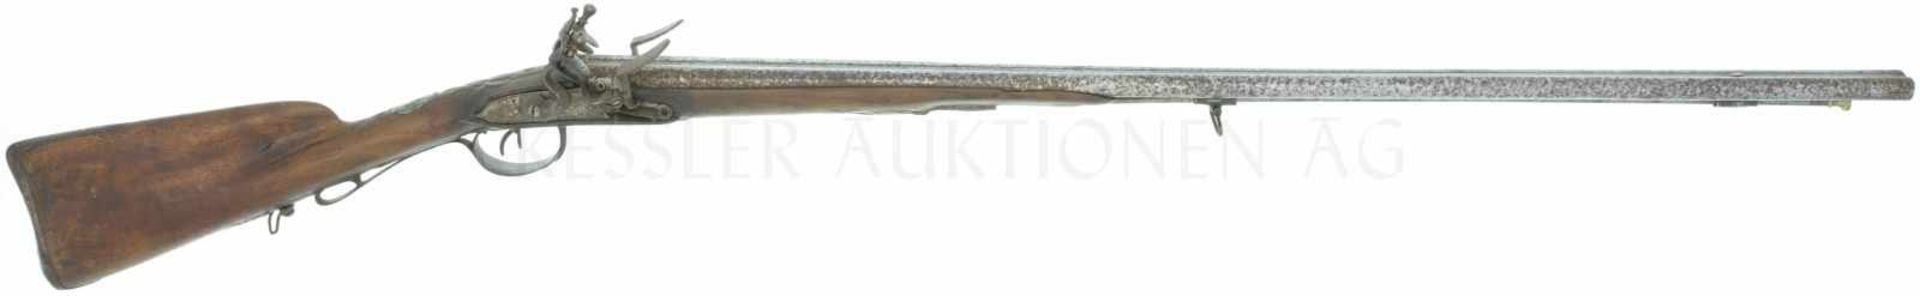 Steinschlossdoppelflinte, Claude Rey, St. Etienne, Kal. 14mm LL 915mm, TL 1310mm, Metallteile